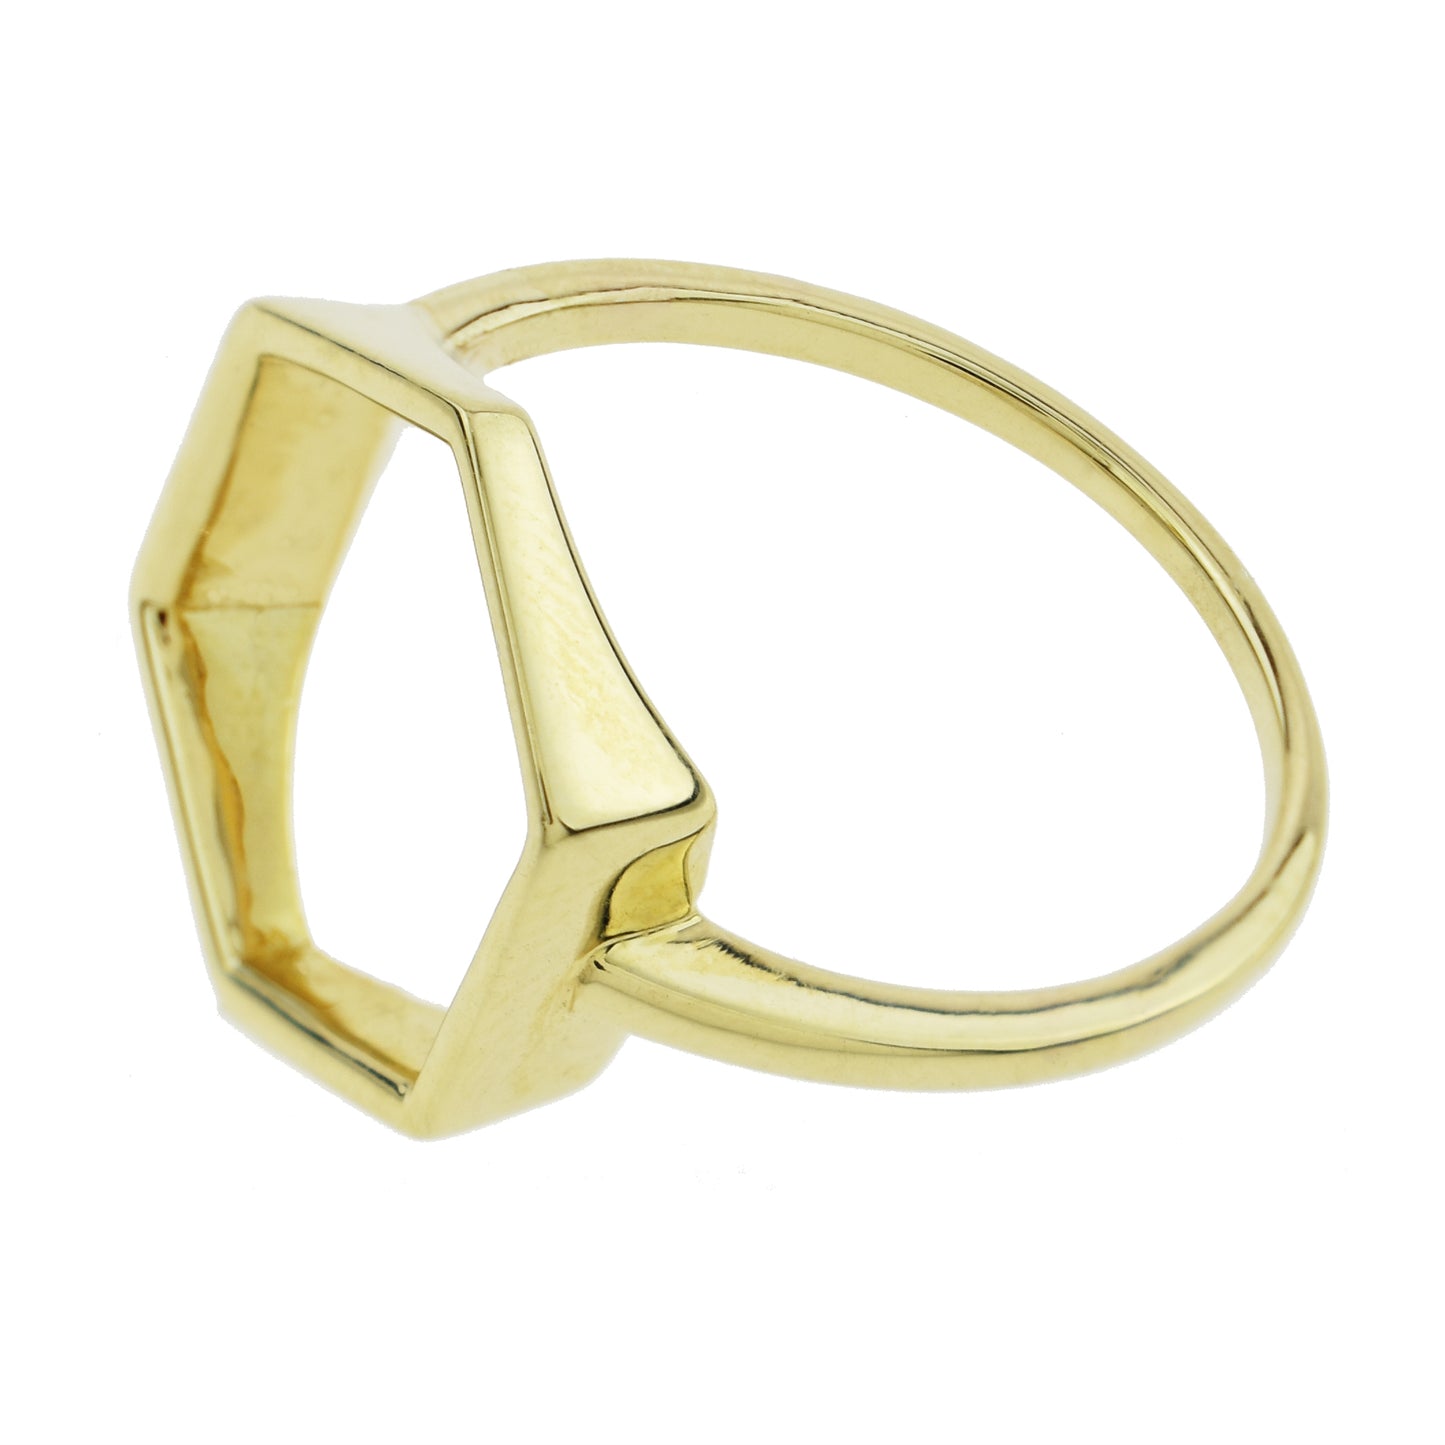 Séchic 14k Open Space Hexagon Centered Gold Ring 6